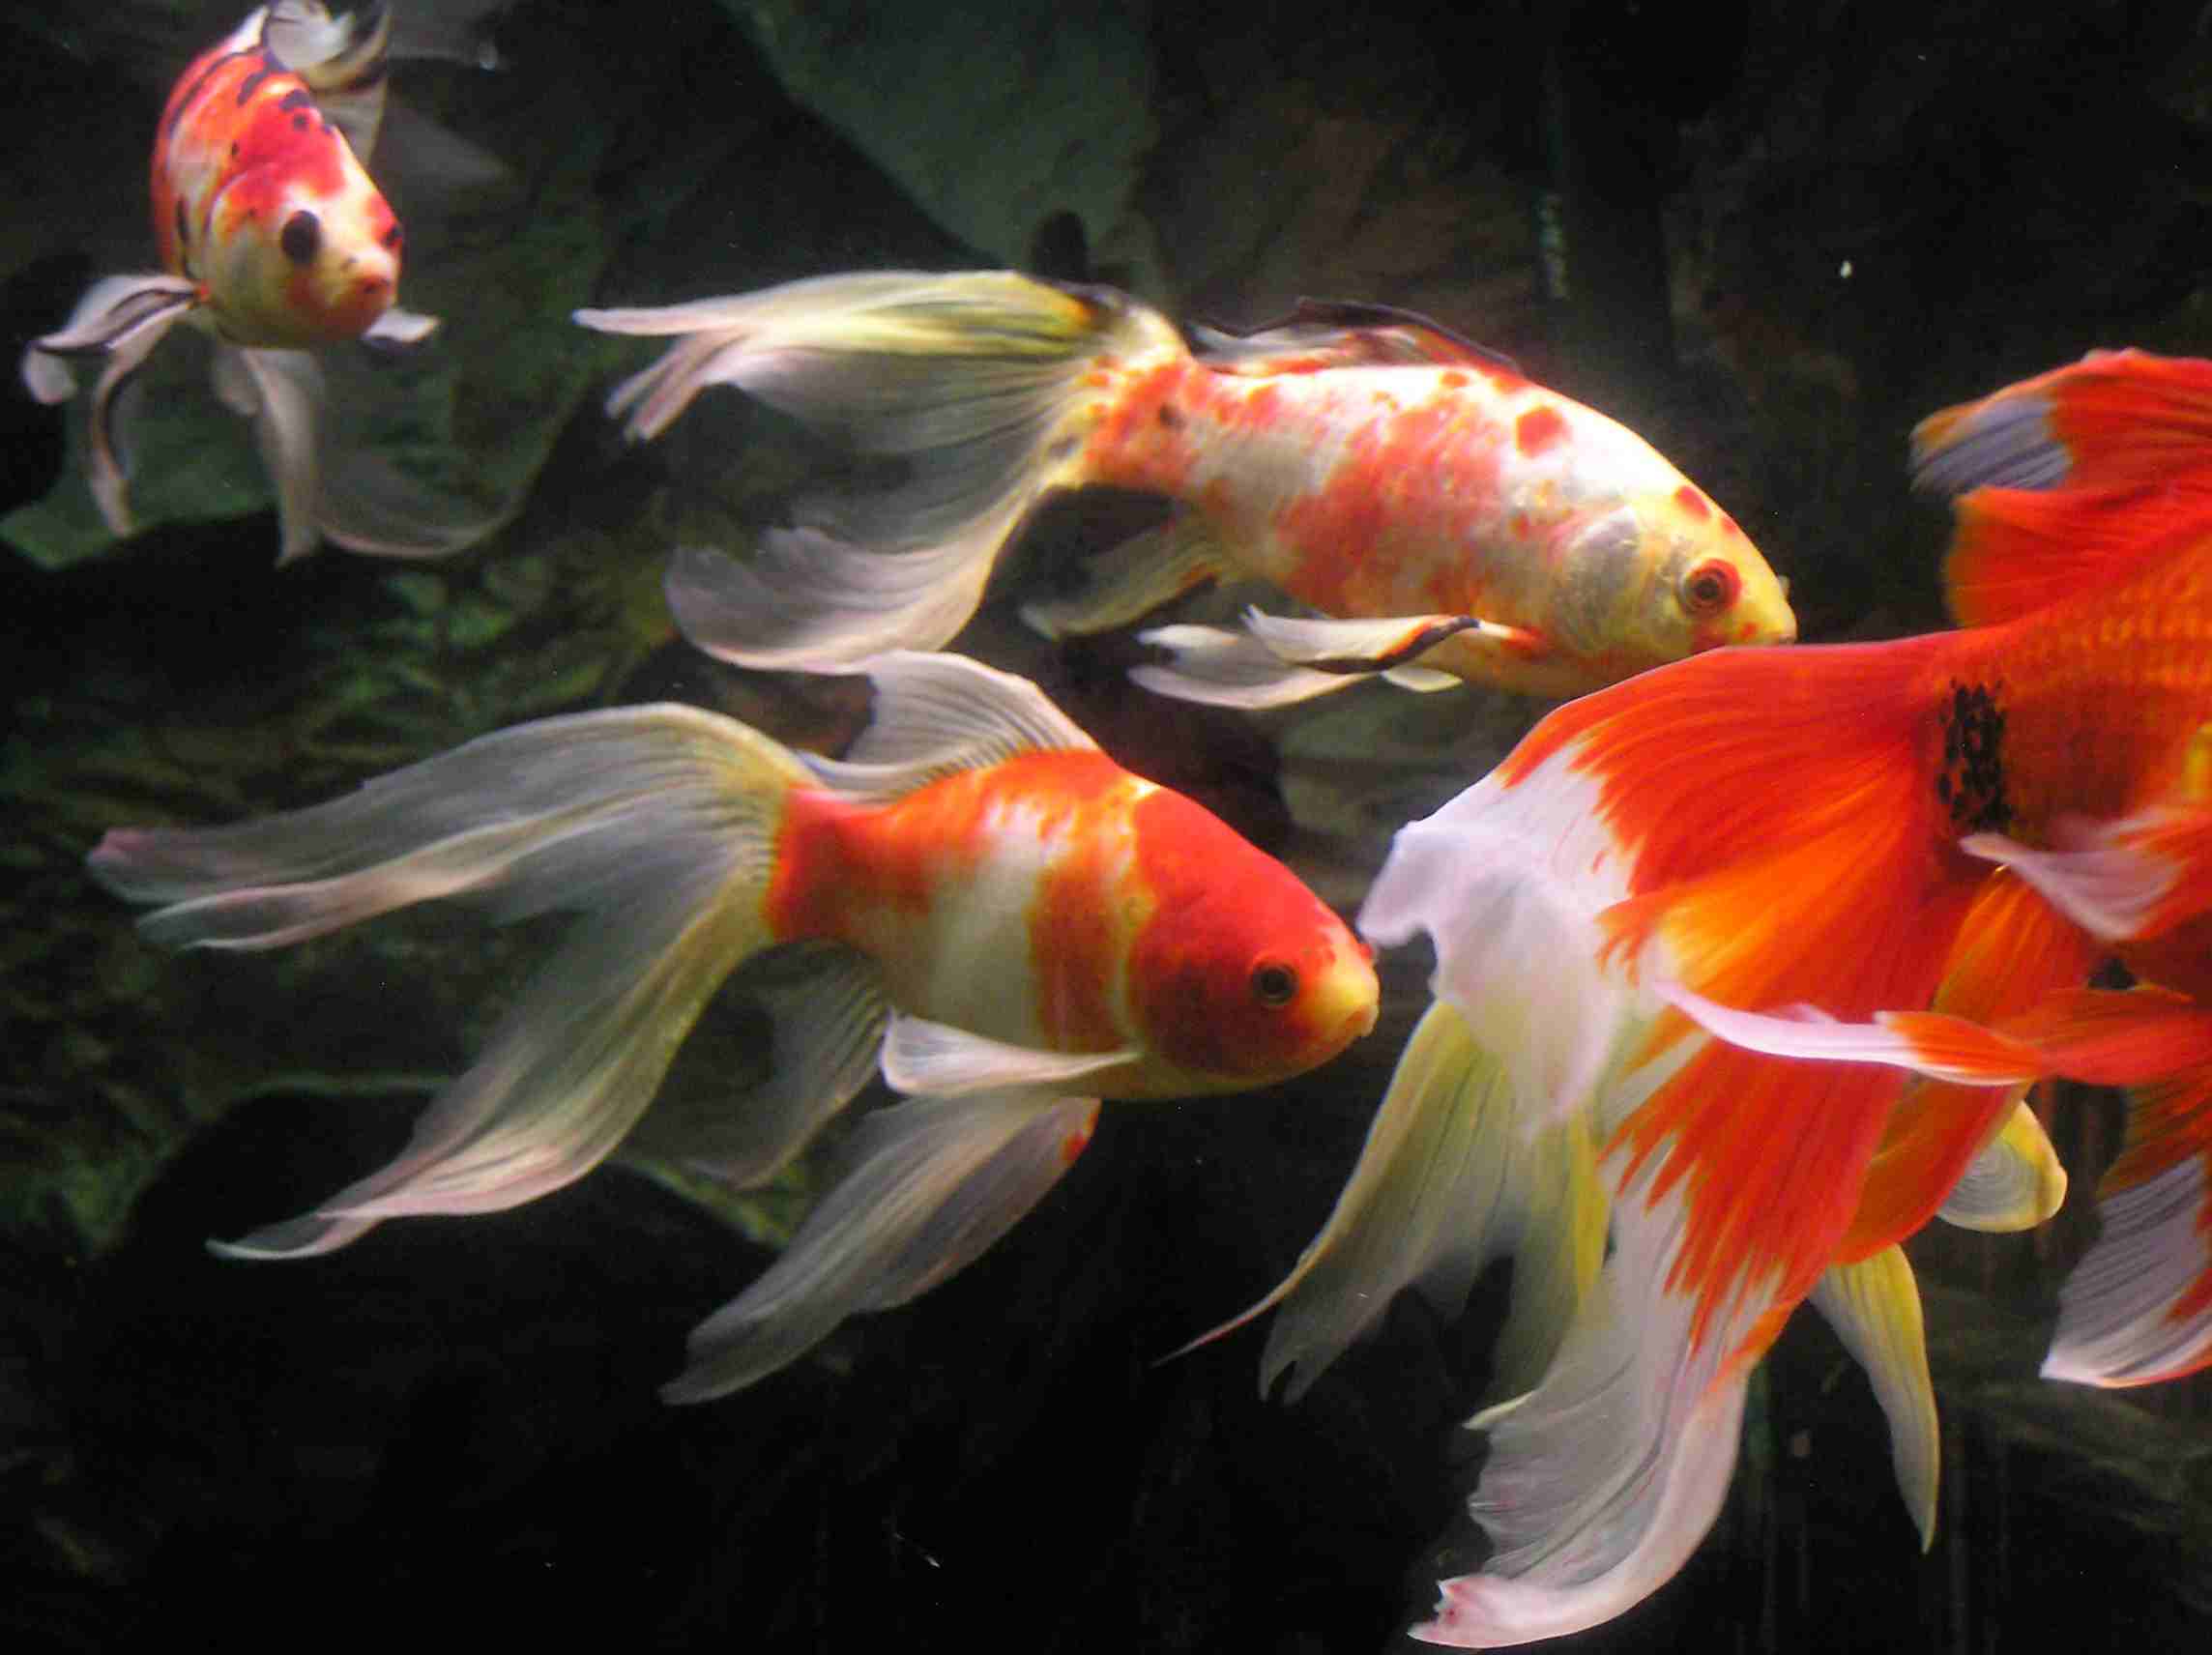 Some fishy goldfish